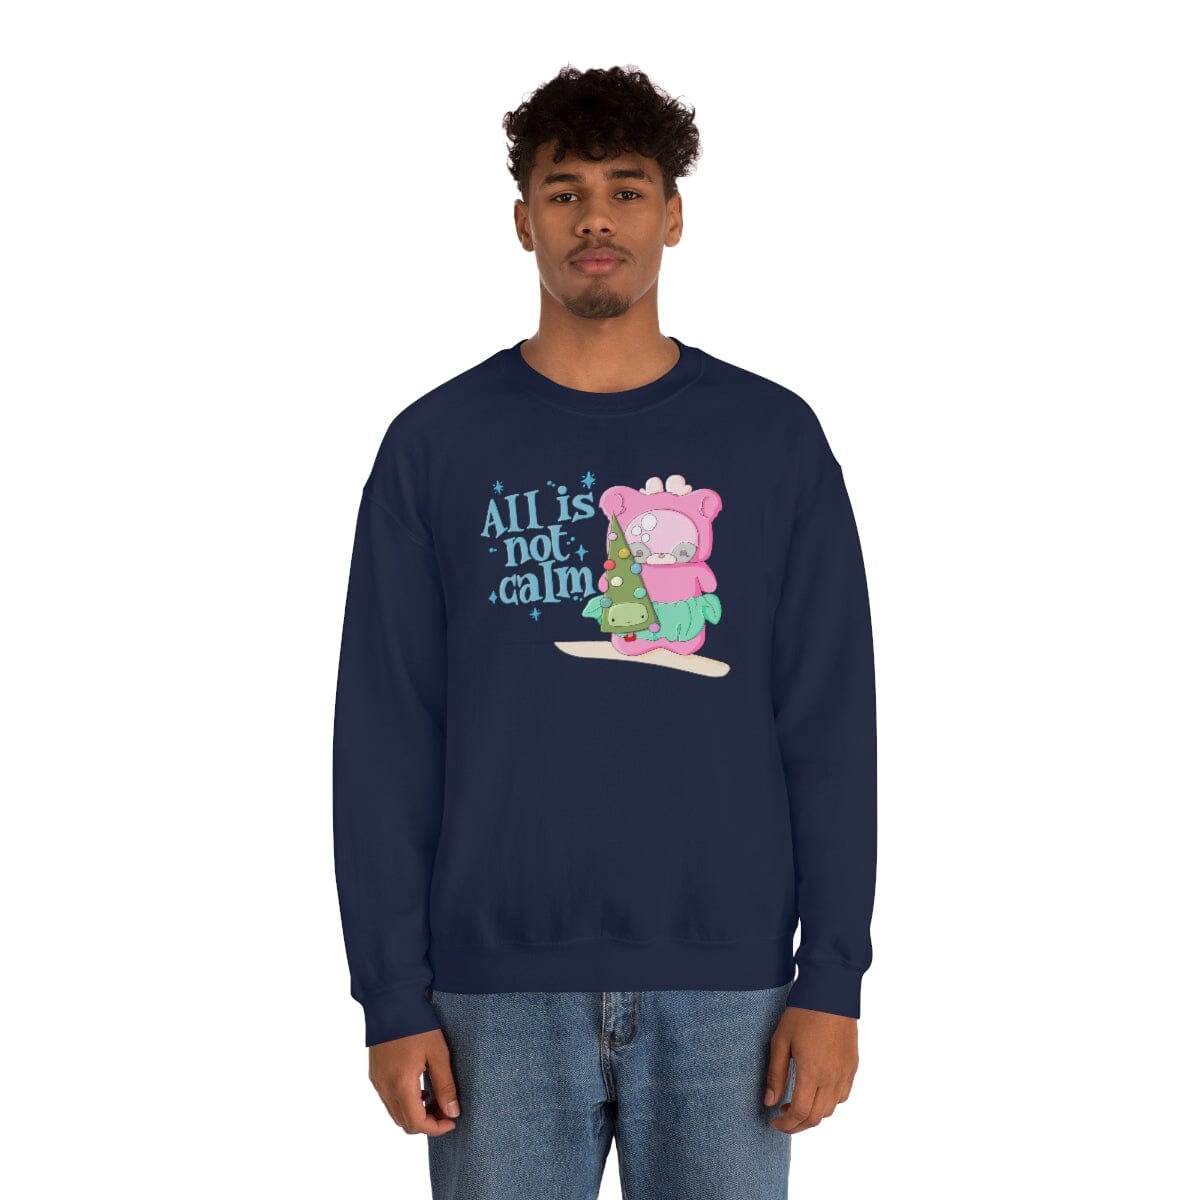 The Ralphie Sweatshirt